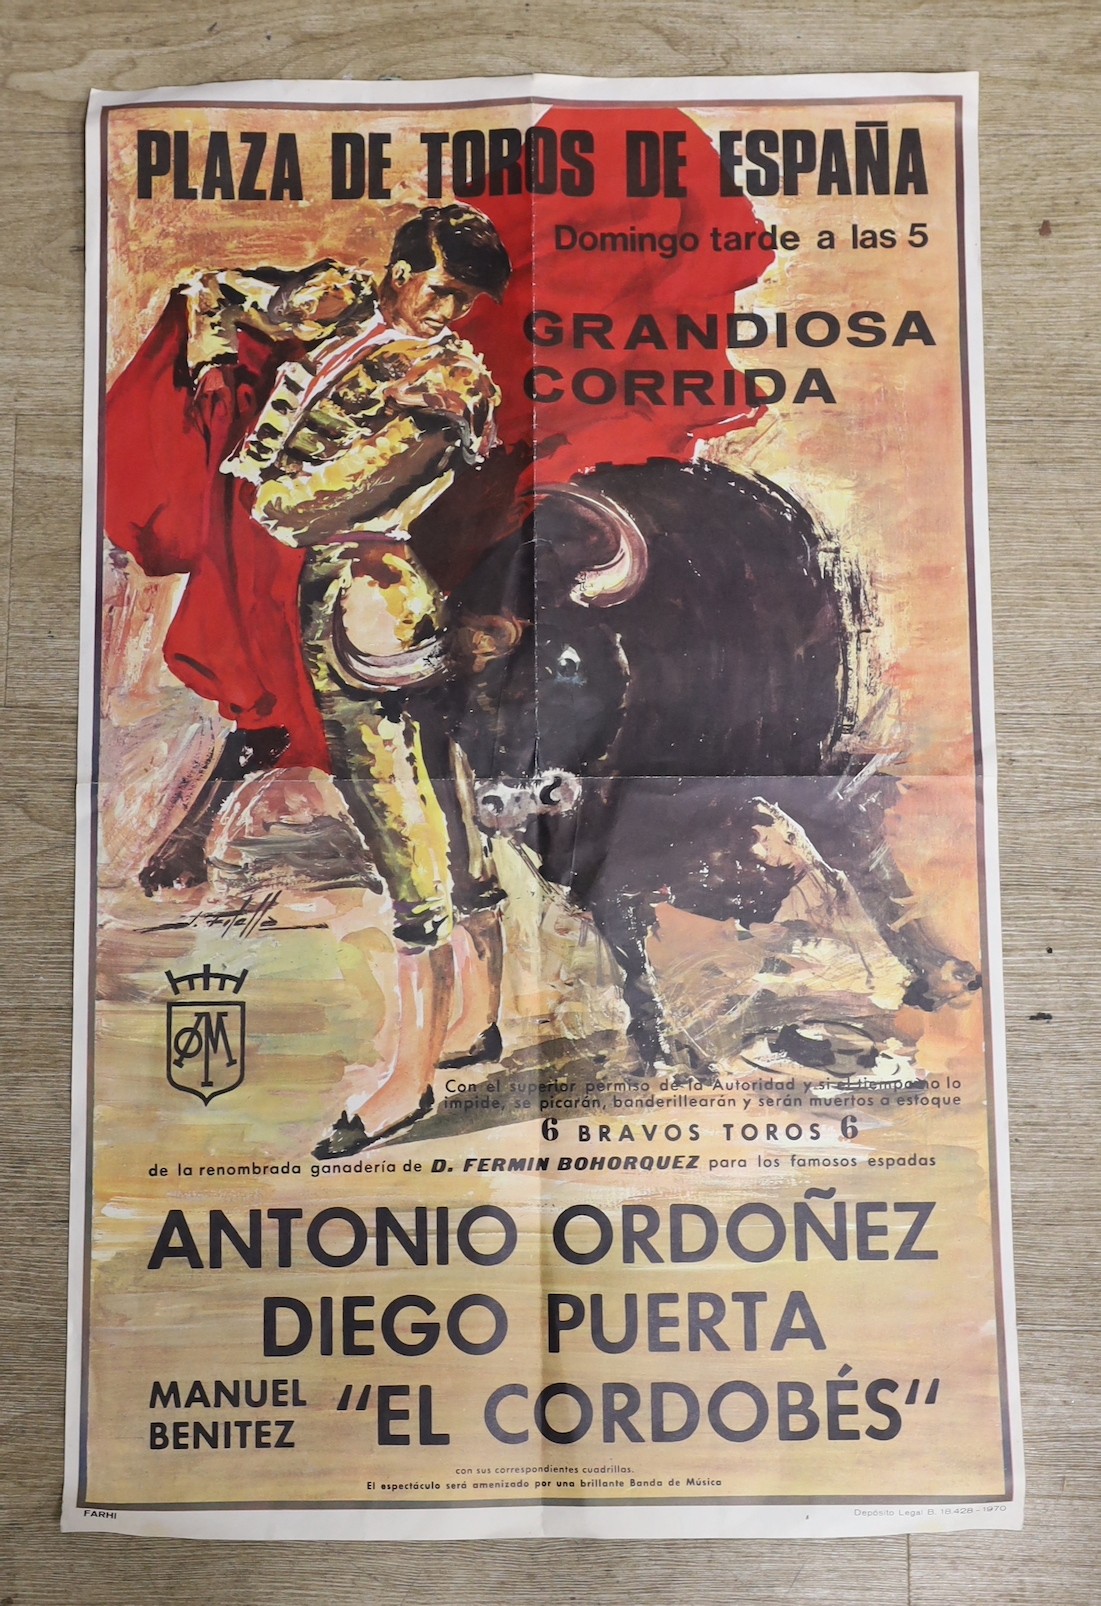 A Bullfighting poster.